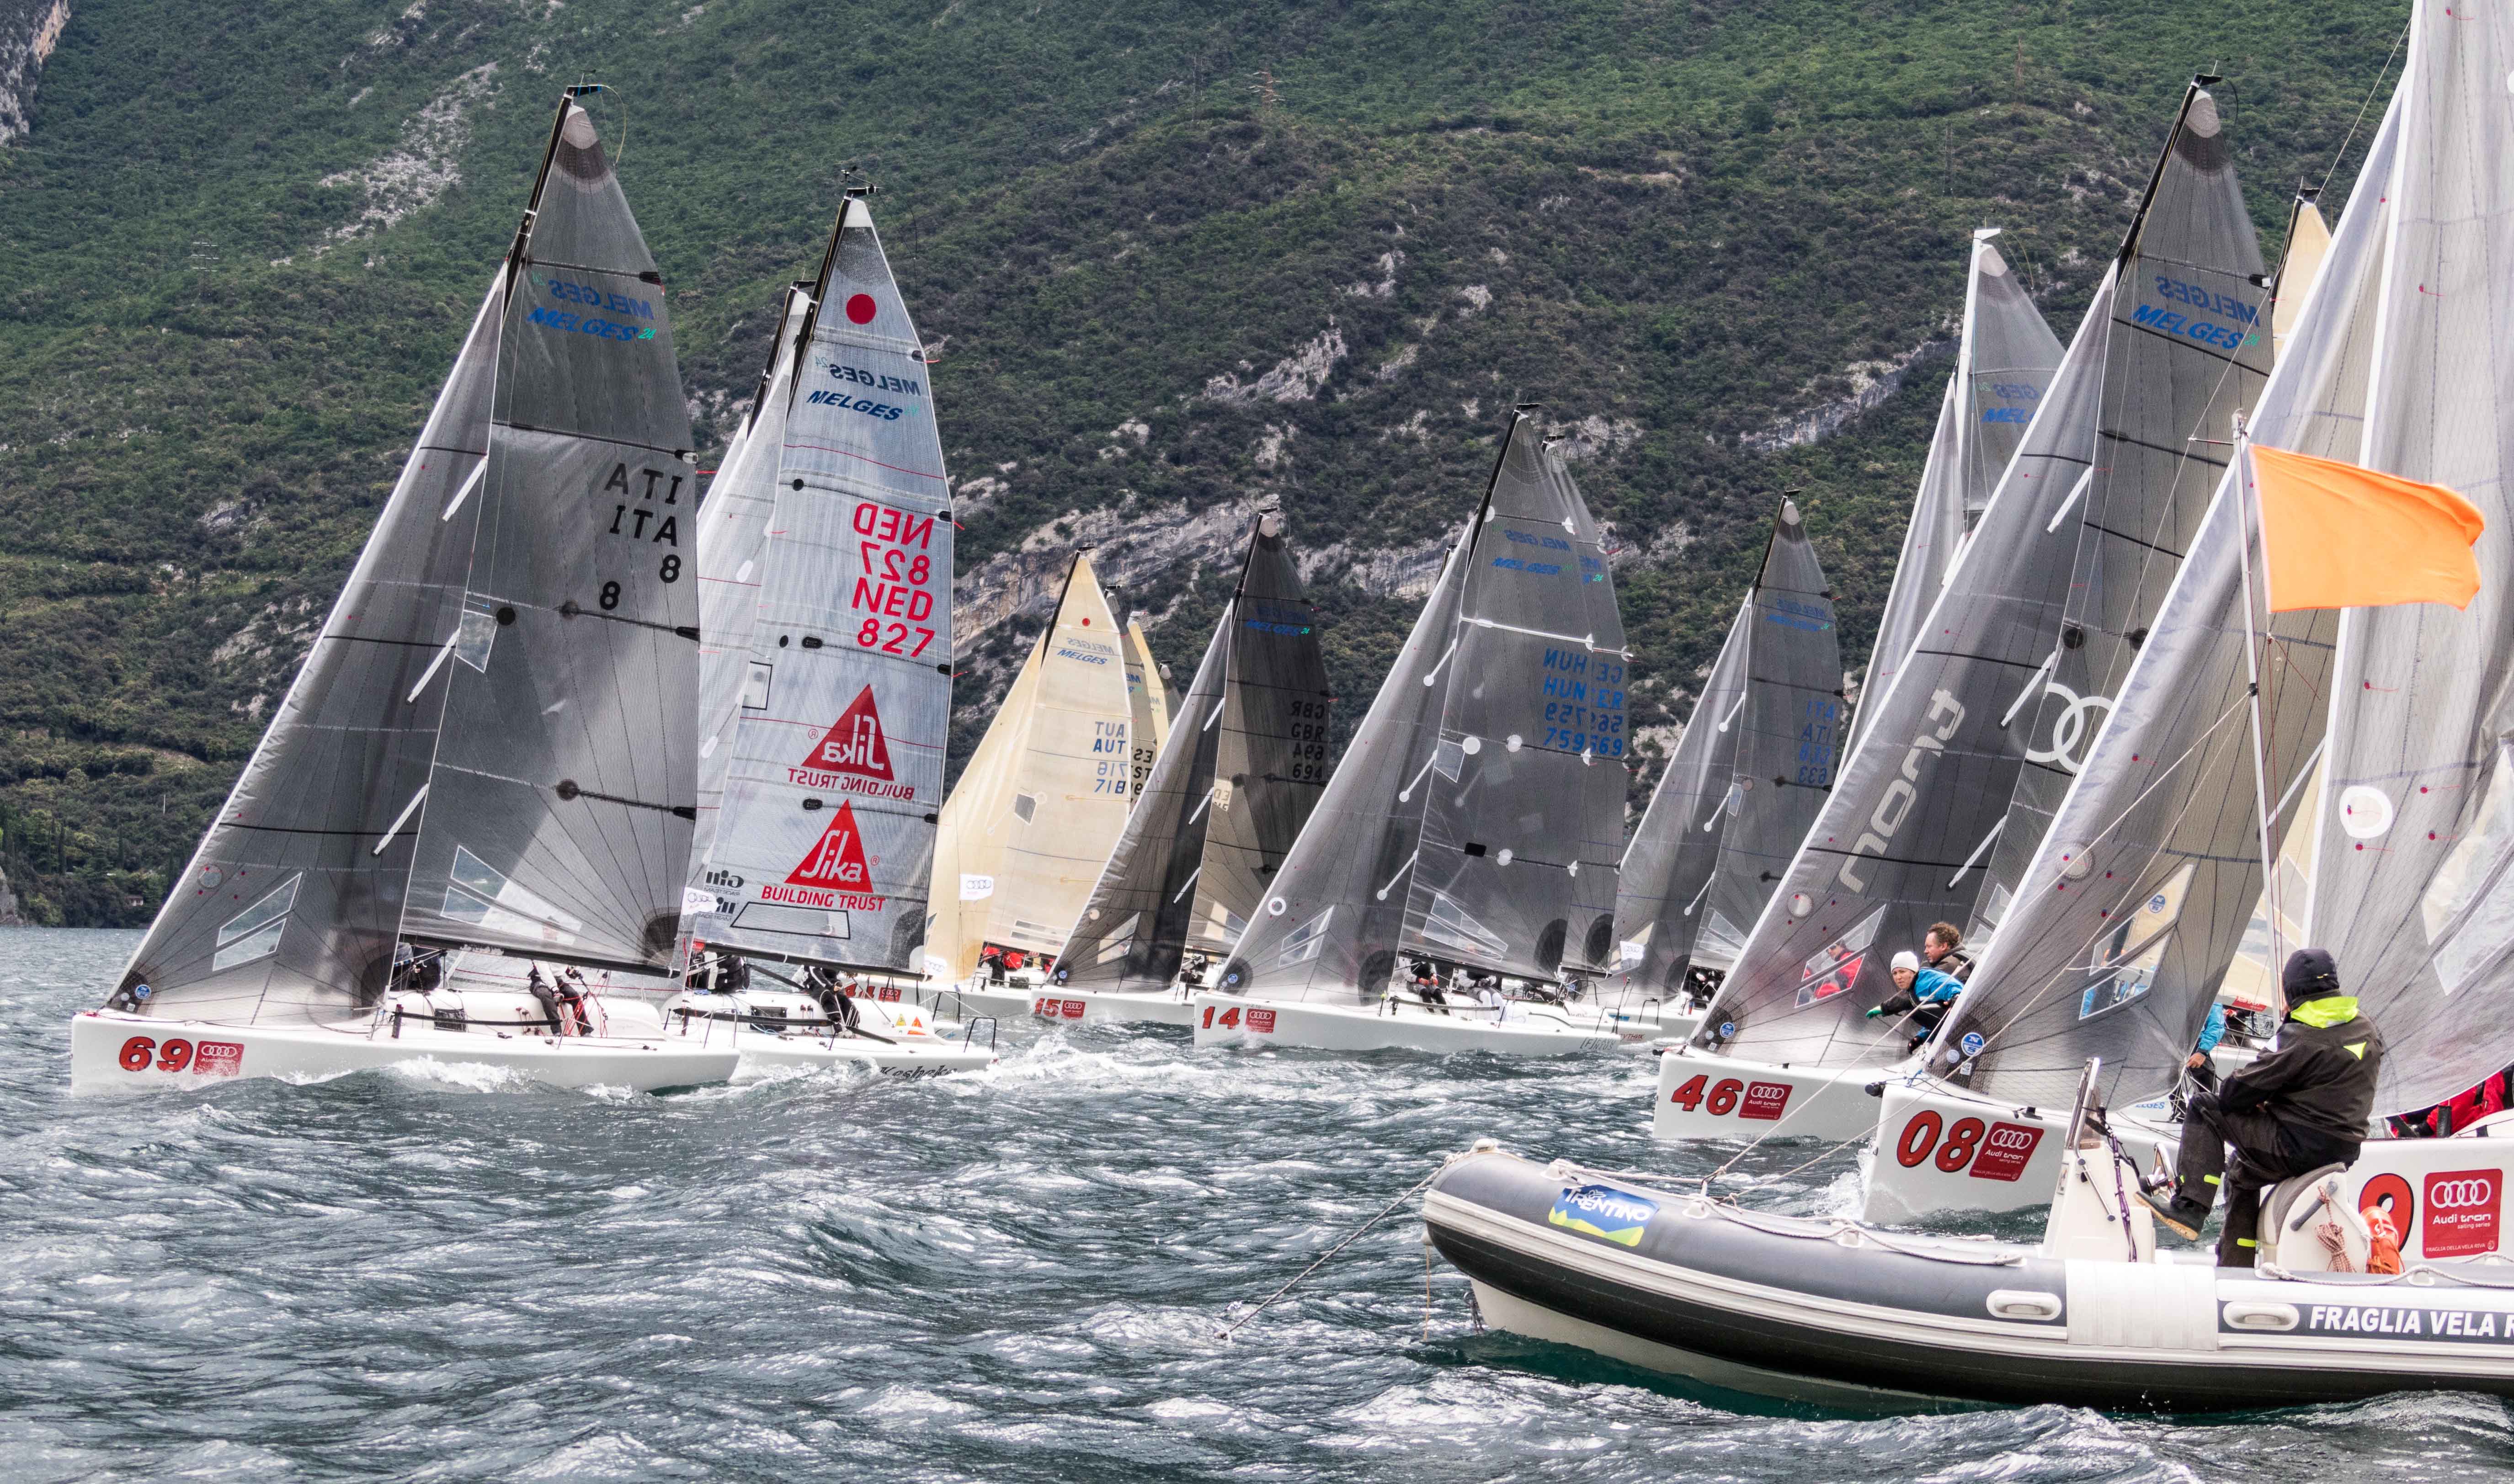  Melges 24  European Sailing Series/Swiss Championship 2016  Luino ITA  the Swiss Final results